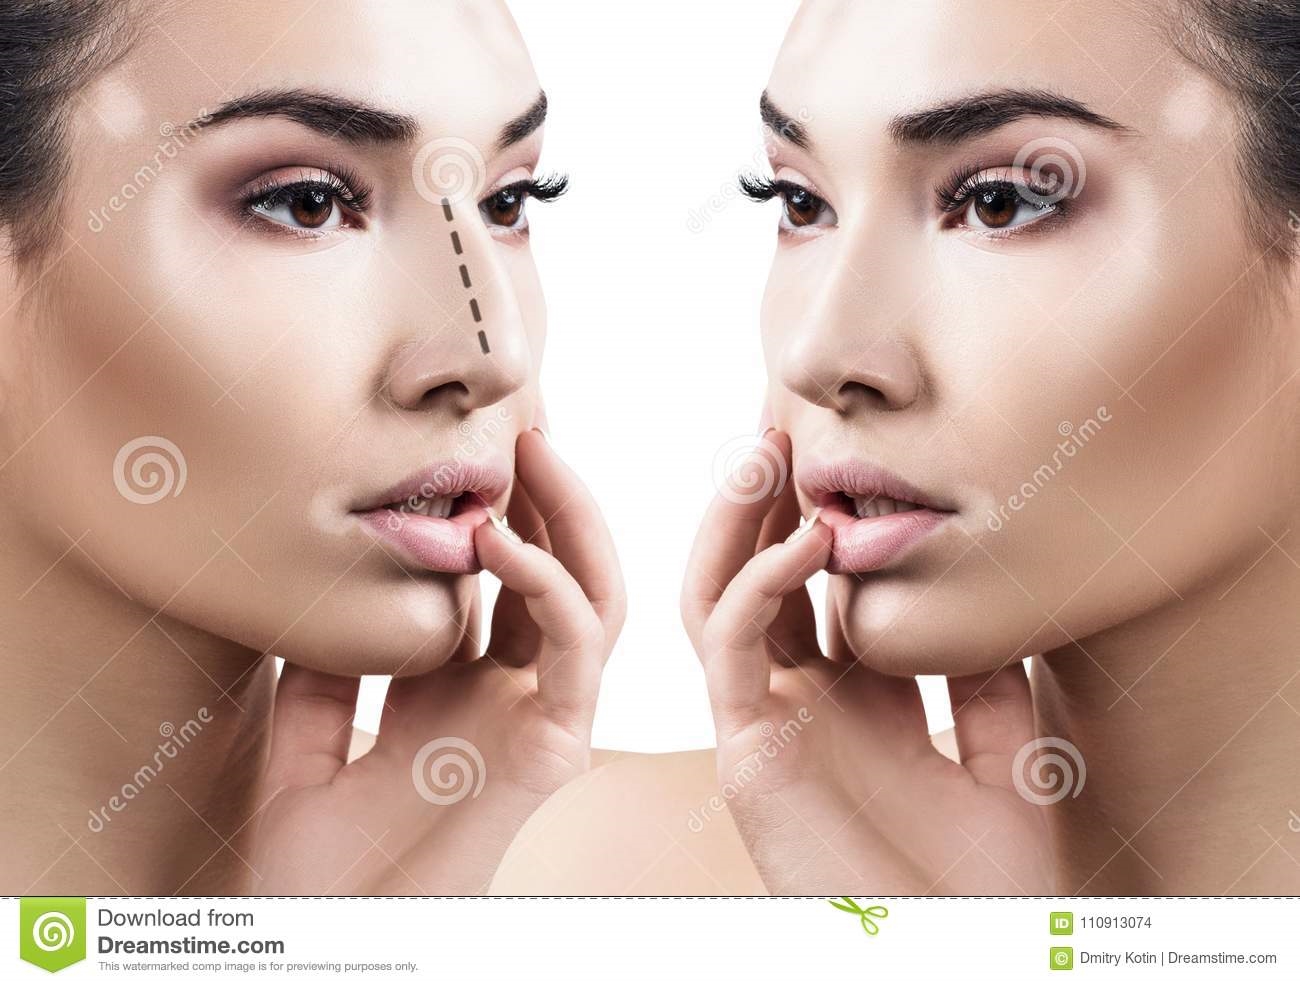 female-nose-cosmetic-surgery-portrait-female-nose-cosmetic-surgery-rhinoplasty-concept-110913074.jpg